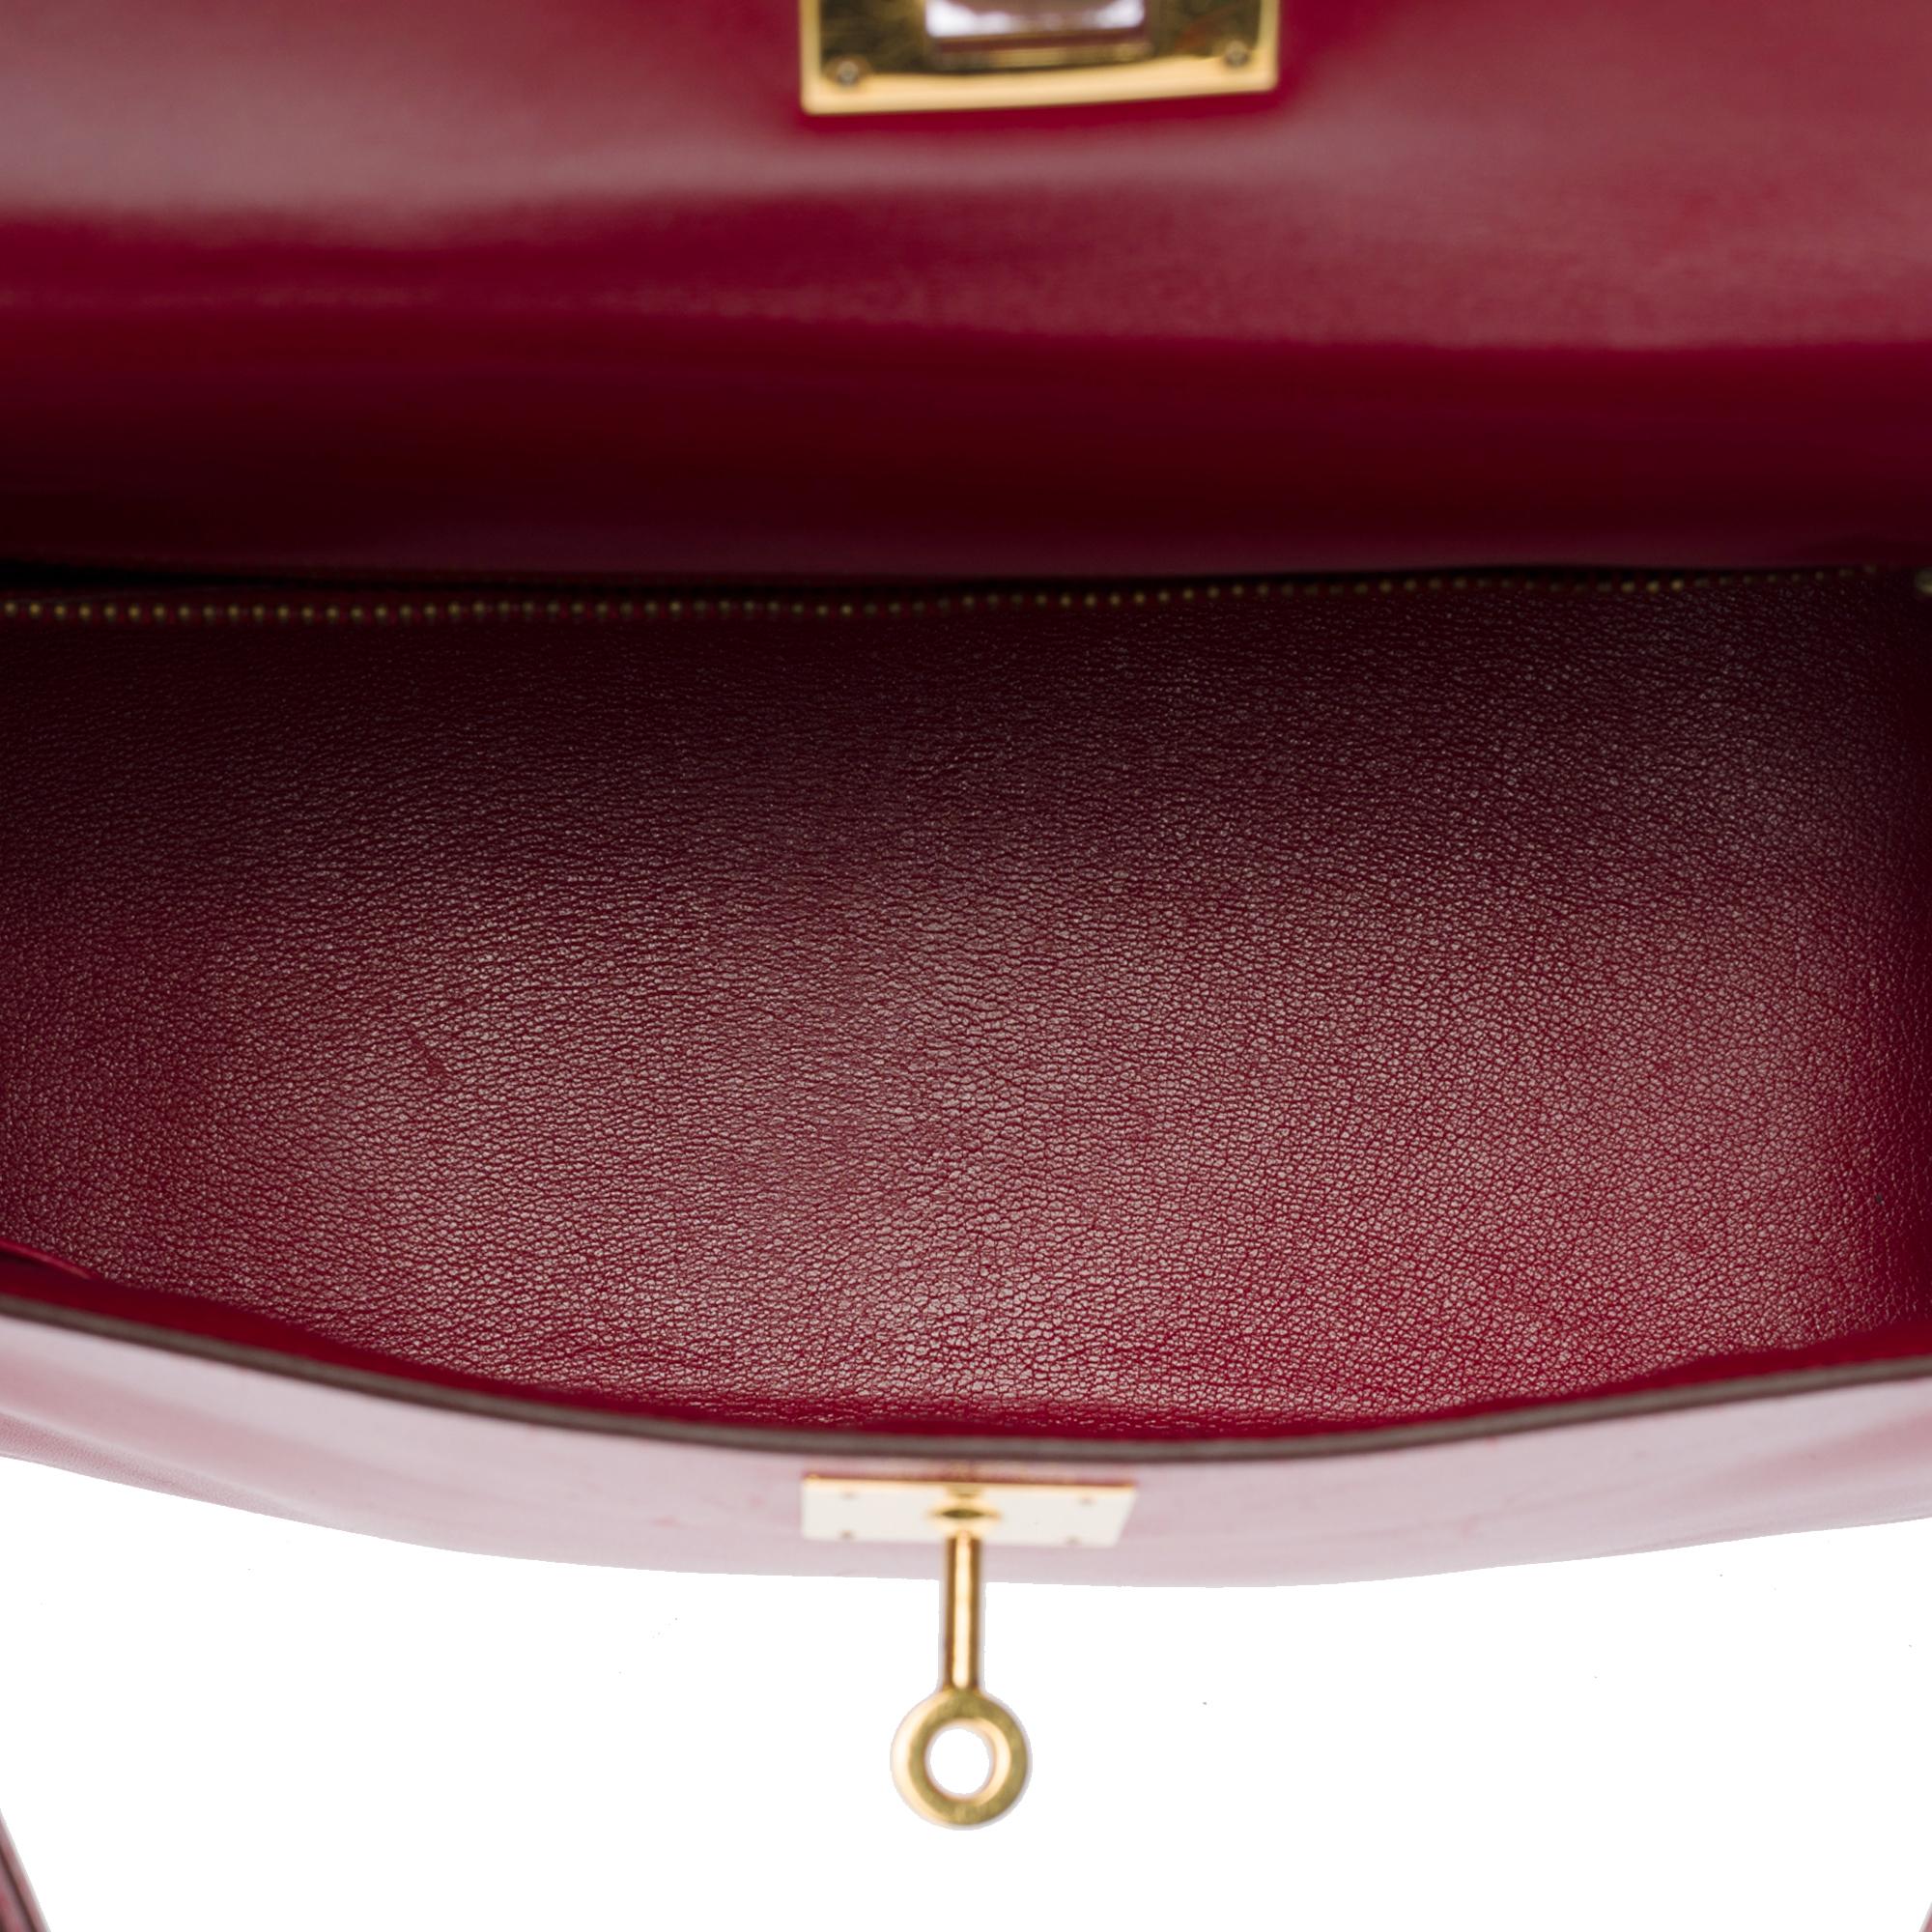 Women's Magnificent Hermes Kelly 28 retourne handbag strap in Burgundy box calfskin, GHW